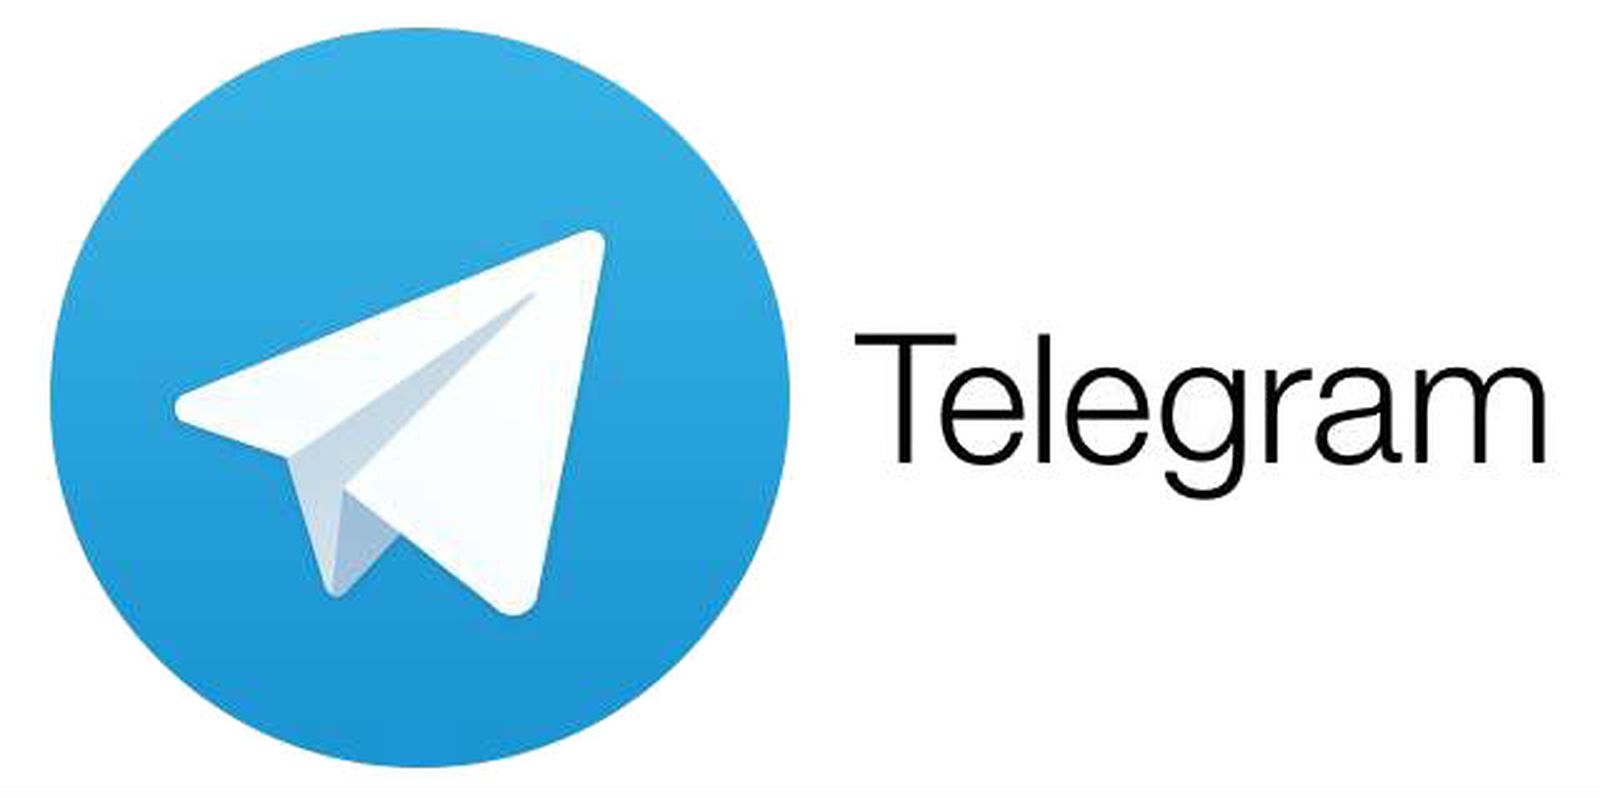 Telegram Gains New Auto-Delete Options, Expiring Invite Links, and More - MacRumors